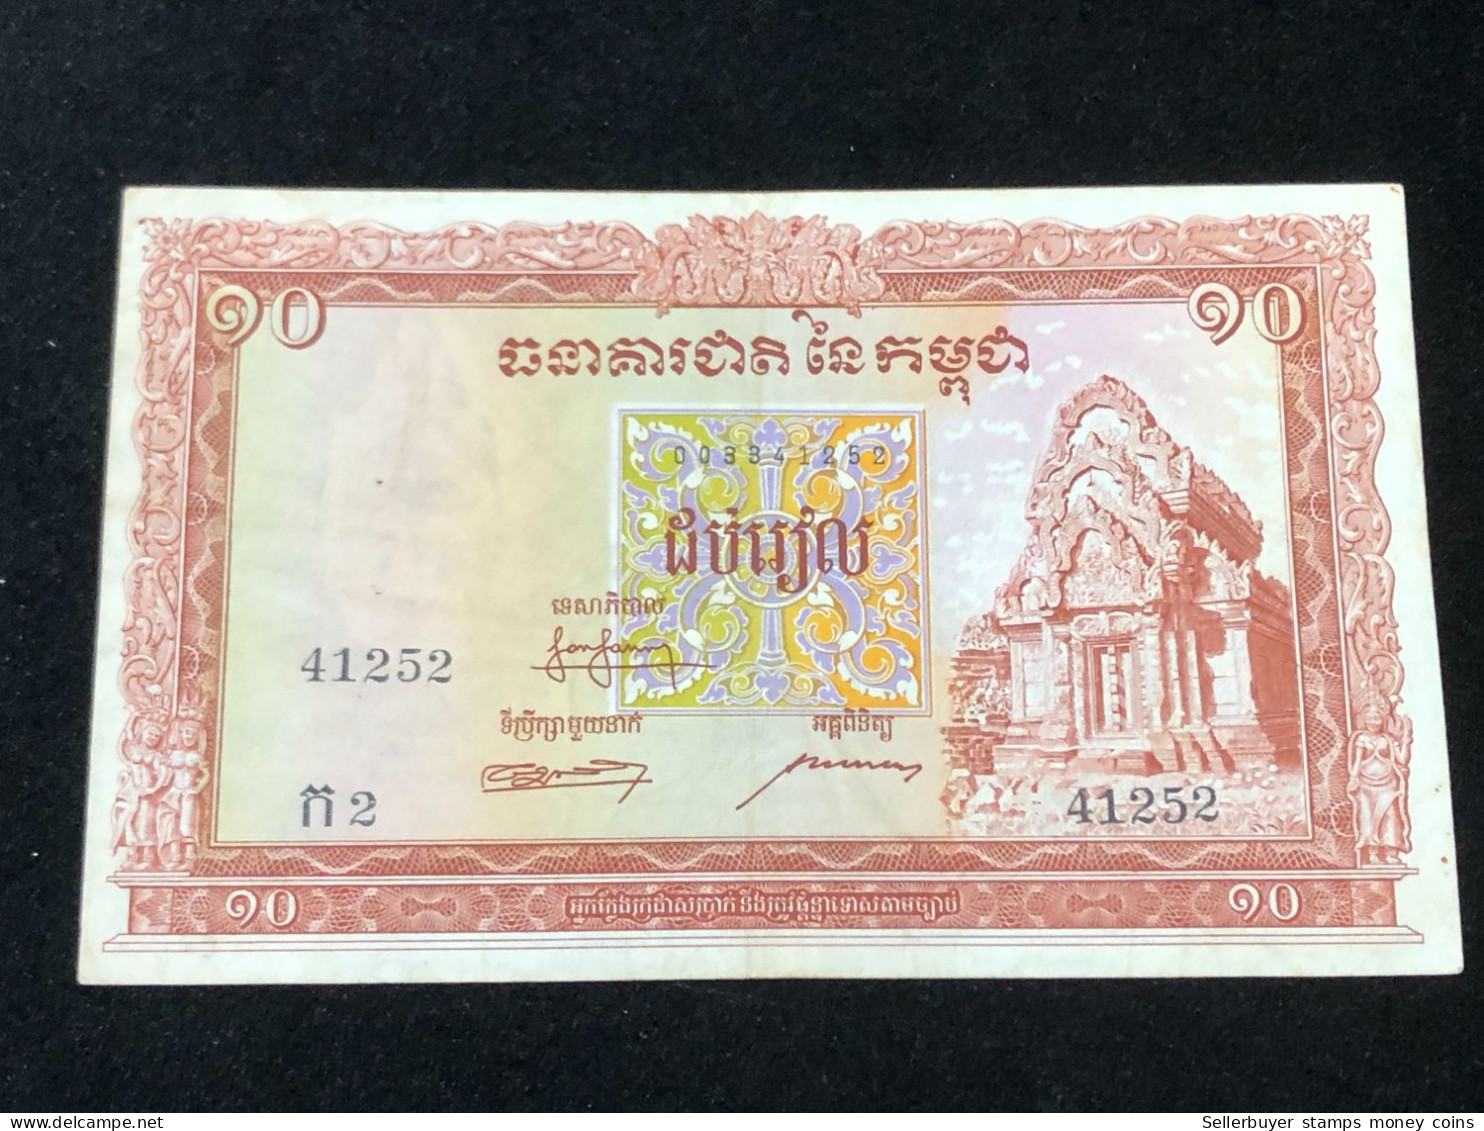 Cambodia Kingdom Banknotes #9 -10 Riels 1955--1 Pcs Au Very Rare - Cambogia